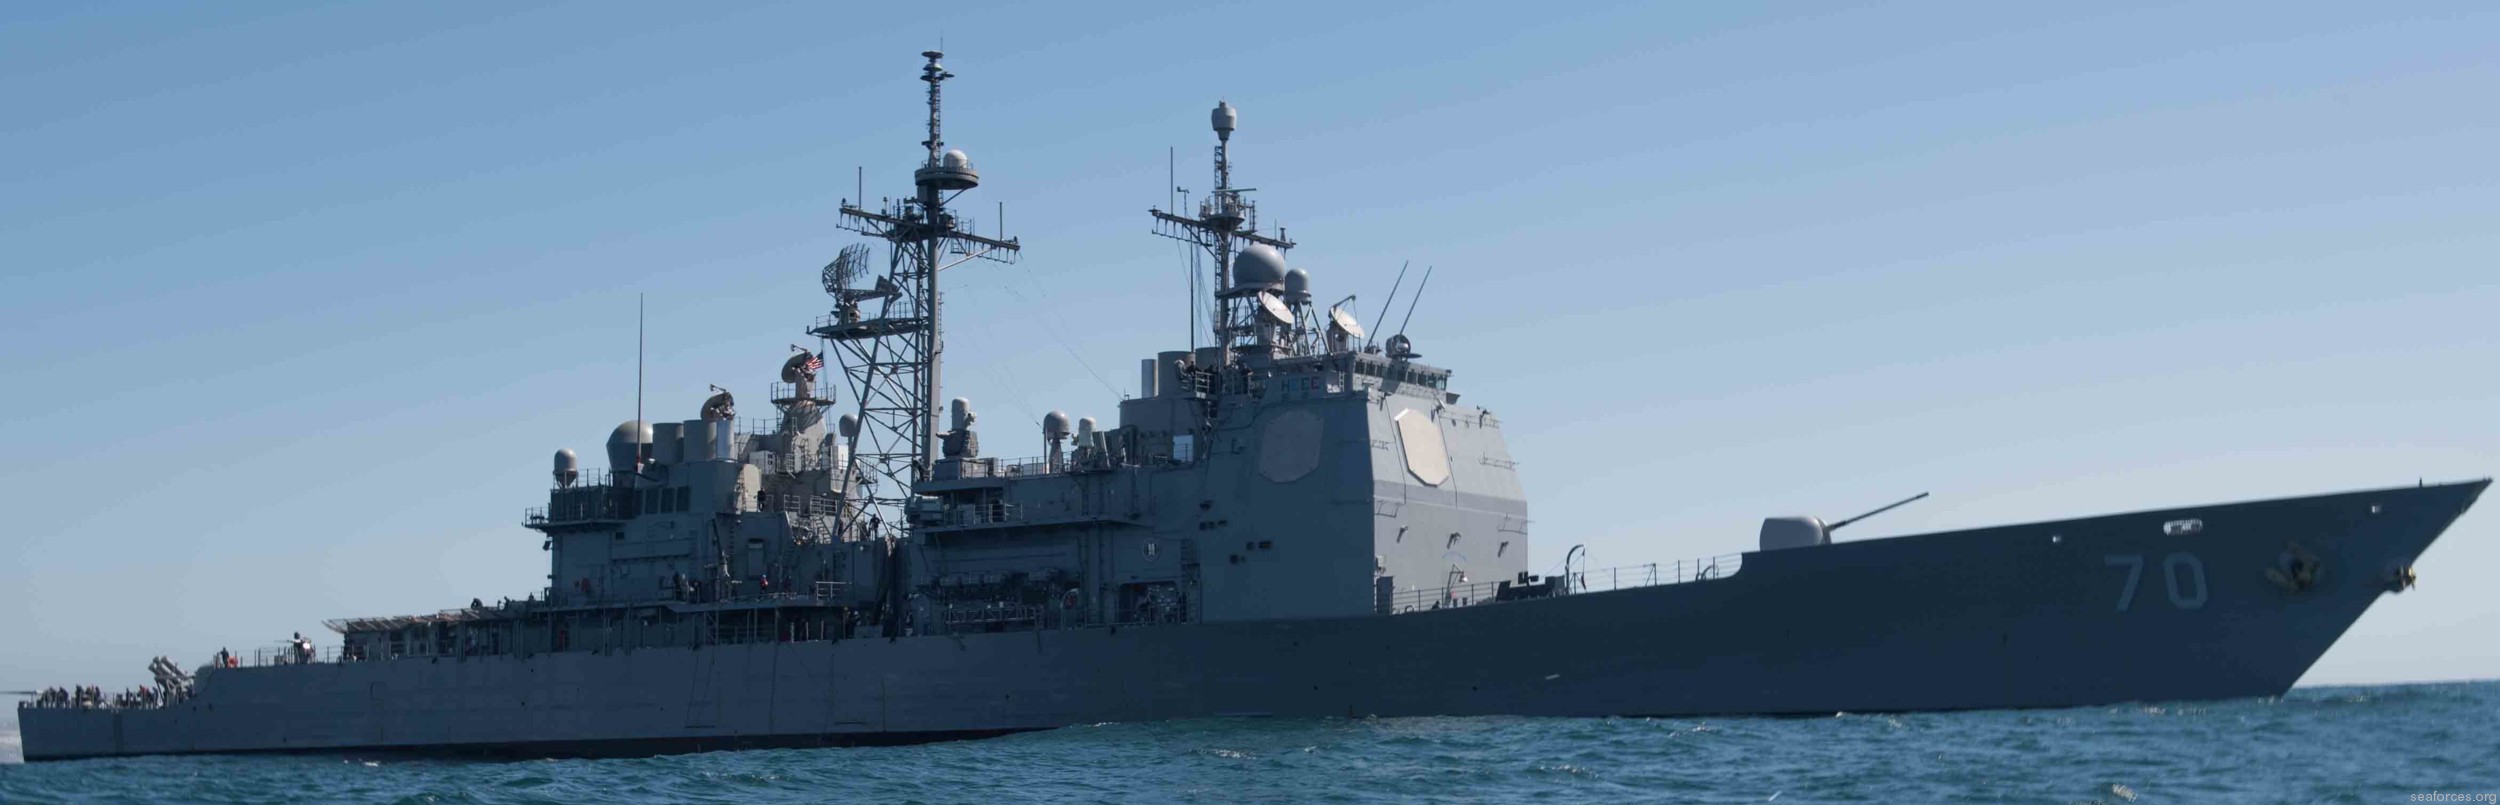 cg-70 uss lake erie ticonderoga class guided missile cruiser navy 06